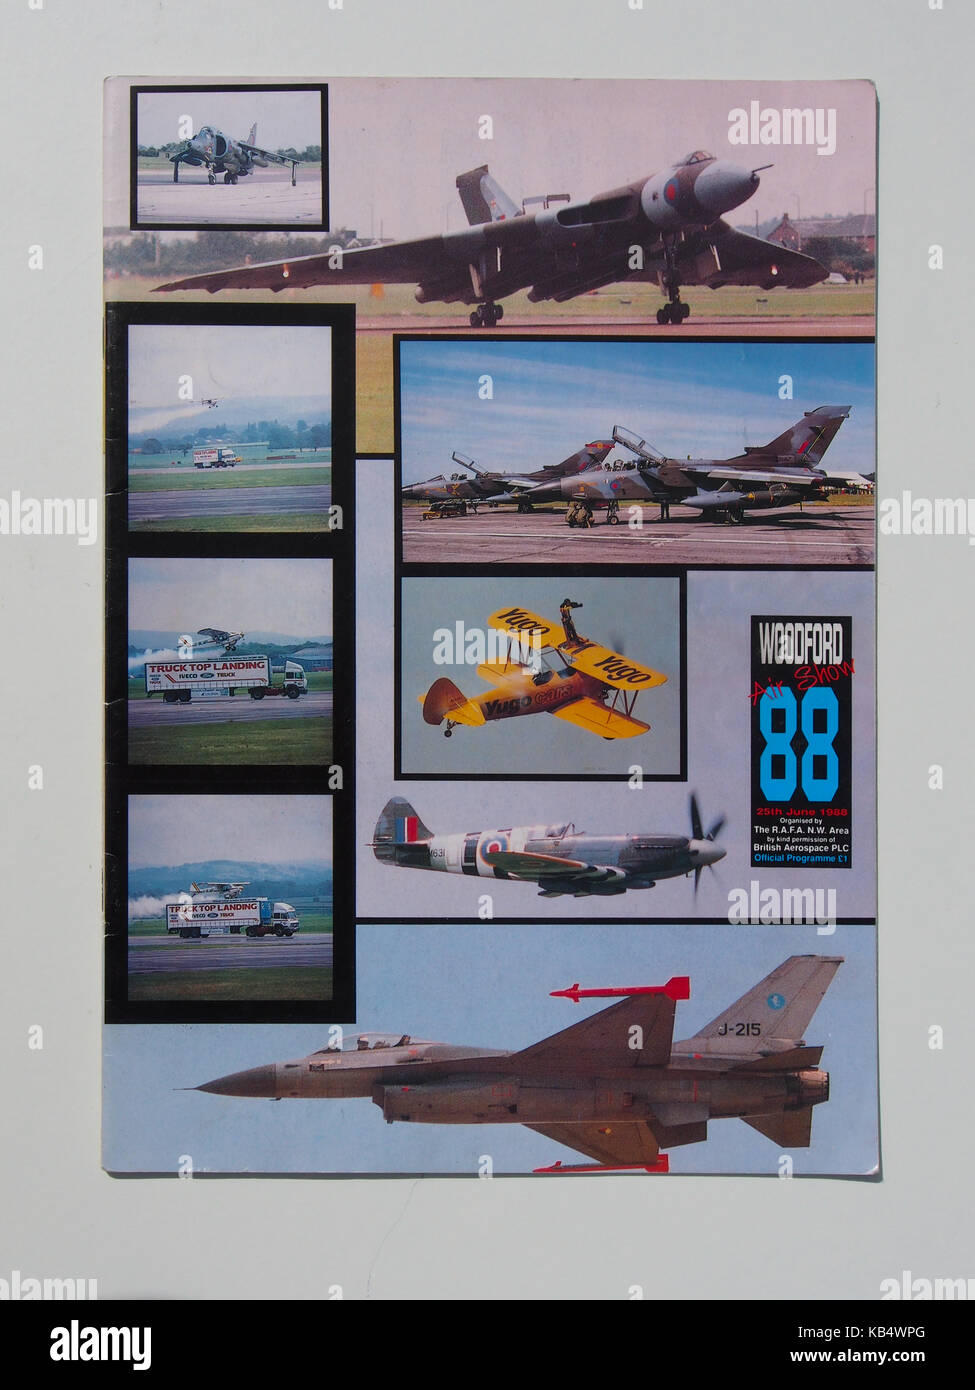 Woodford Air Show 1988 Programm Stockfoto